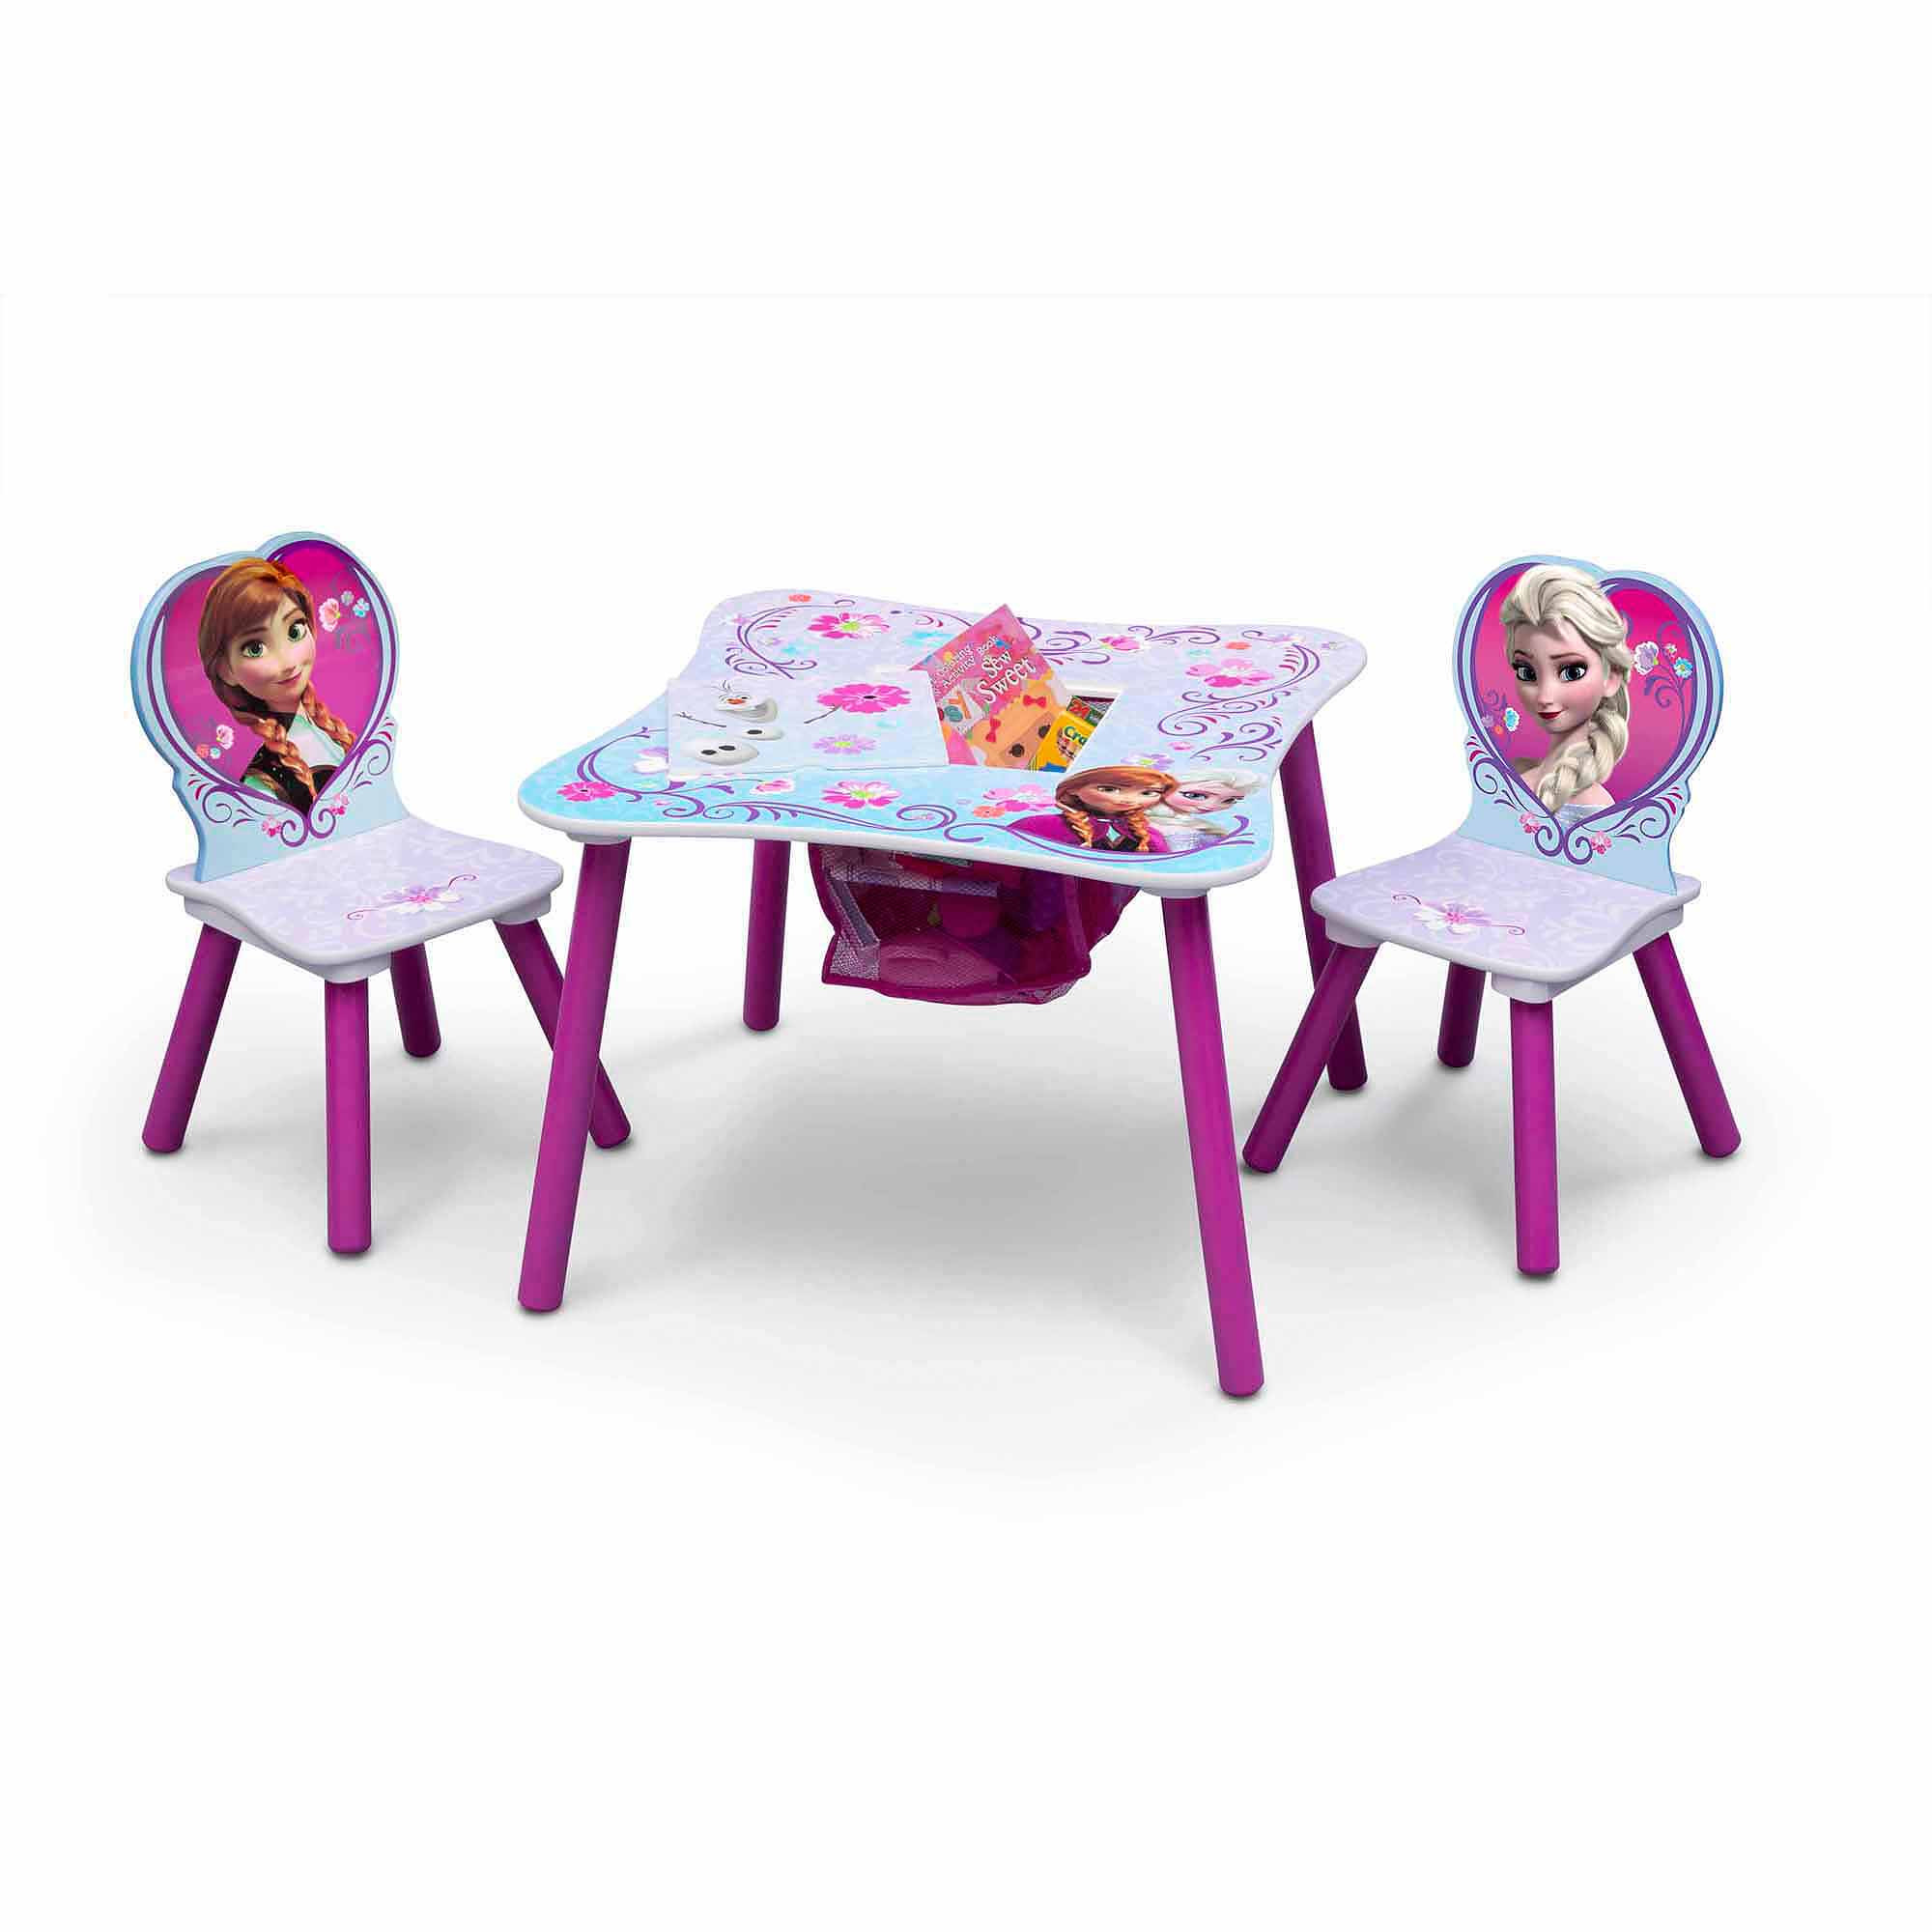 Walmart Kids Table Set
 KidKraft Rectangle Table and Chairs Set Natural Walmart